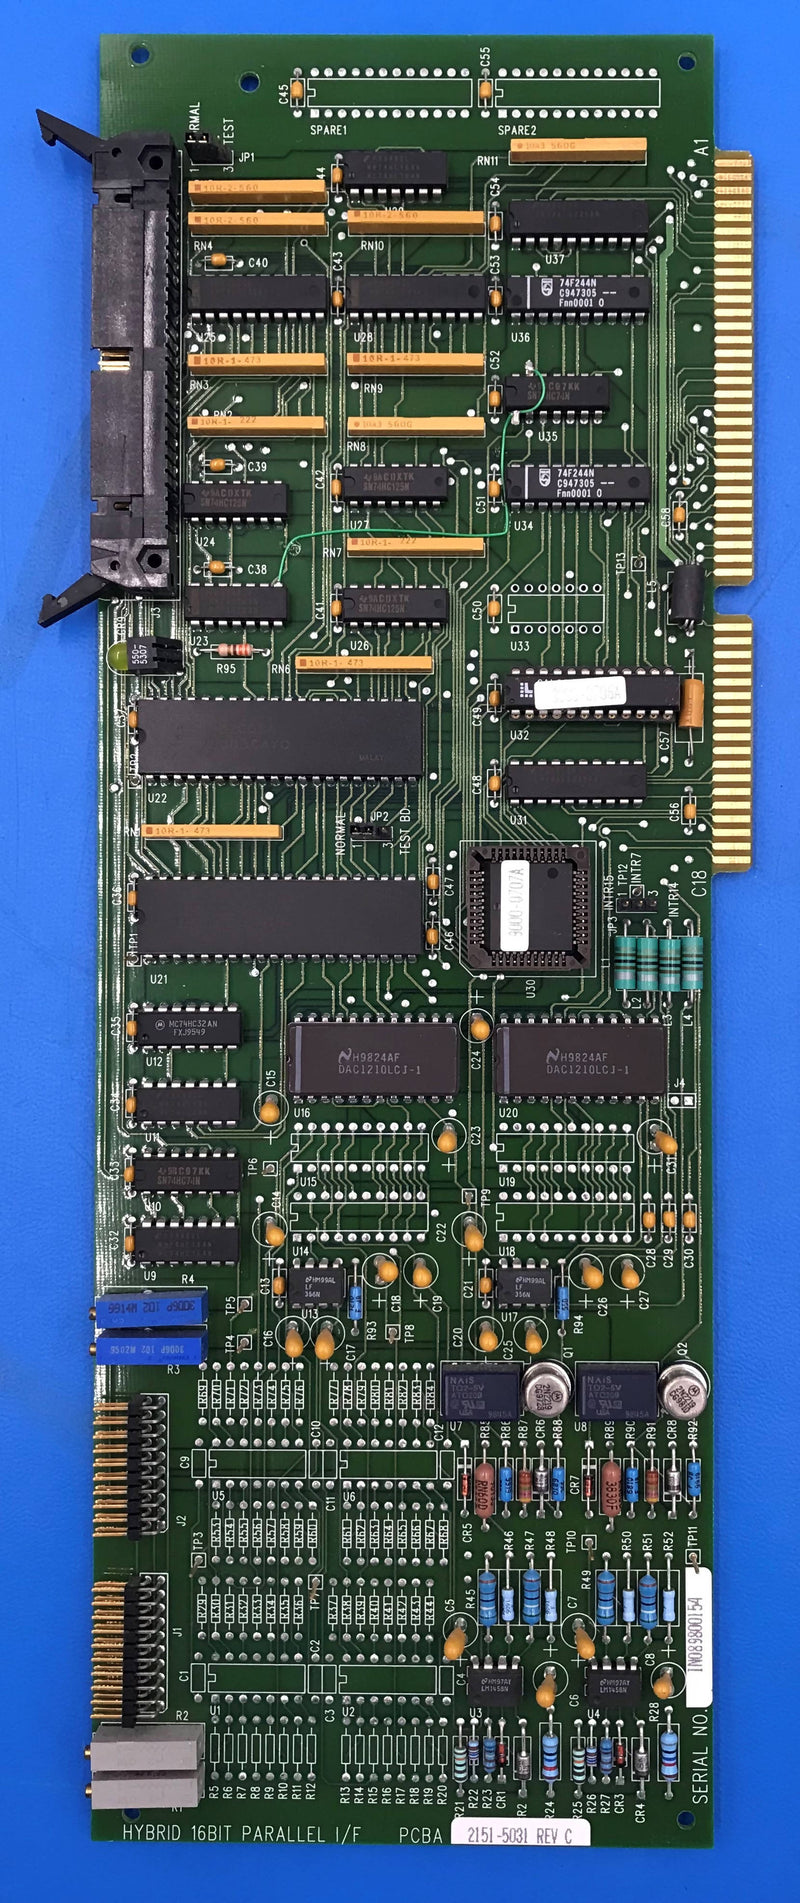 Hybrid 16BIT Parallel I/F PCB (2151-5031 Rev C)Philips Gamma Camera